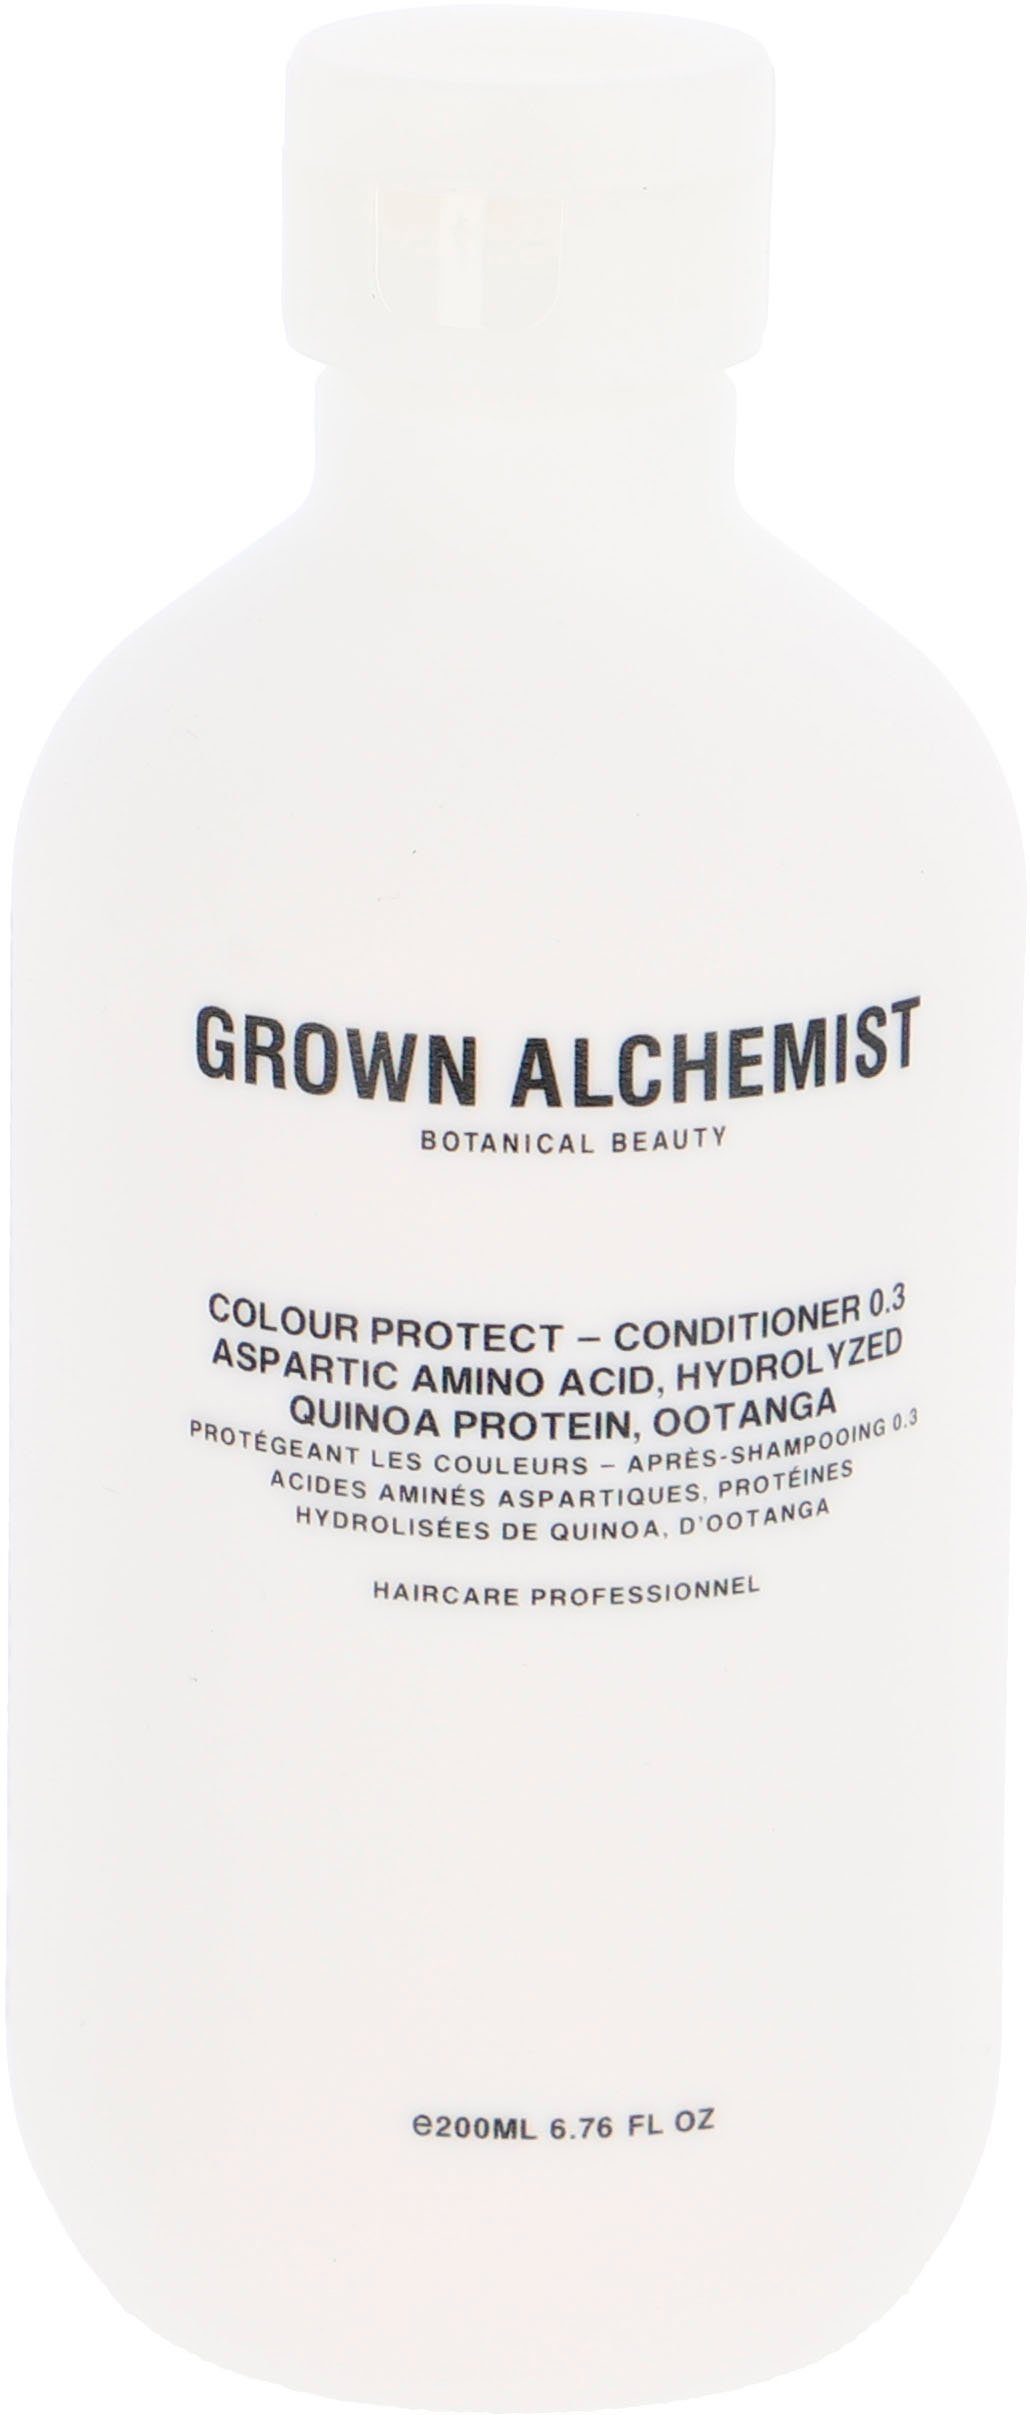 GROWN ALCHEMIST Haarspülung Colour Protein, Aspartic - Quinoa Protect Ootanga Amino Conditioner 0.3, Acid, Hydrolyzed